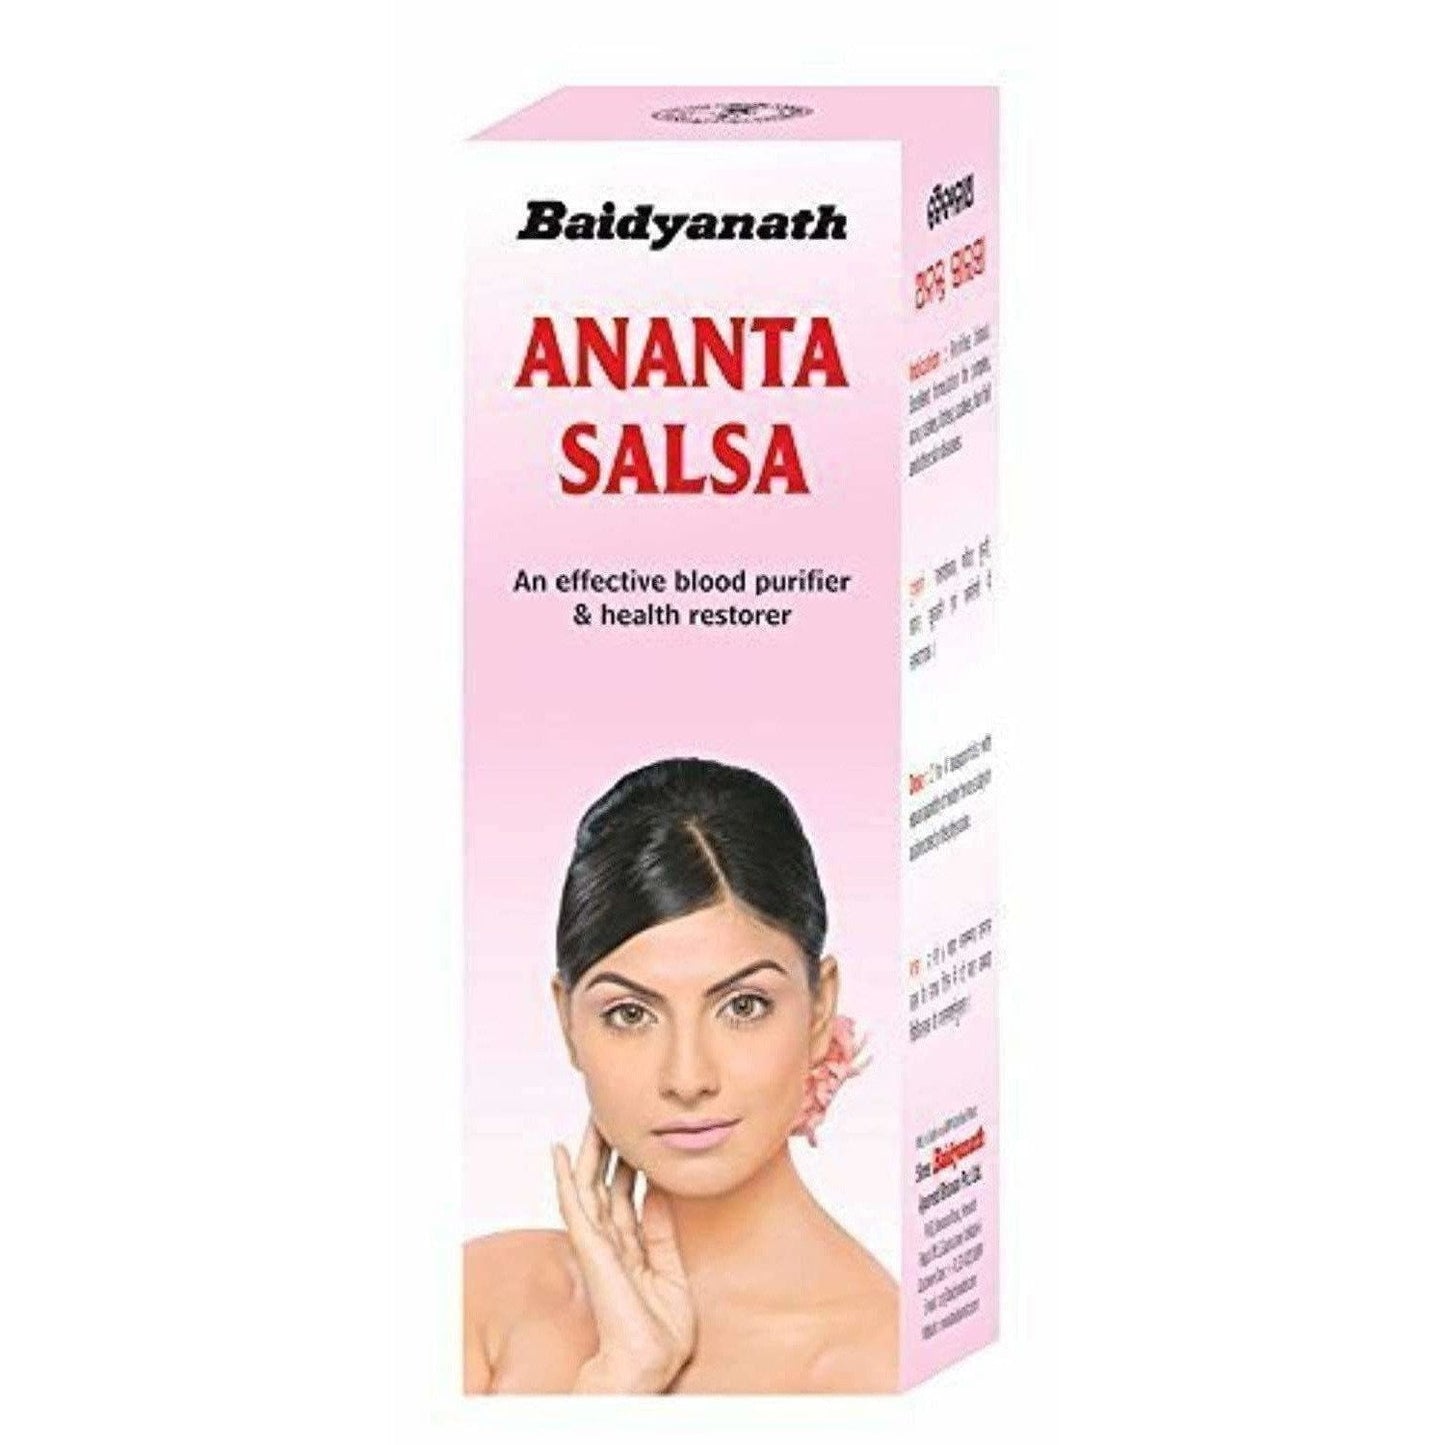 Baidyanath Ananta Salsa - 220 ml Pack of 2